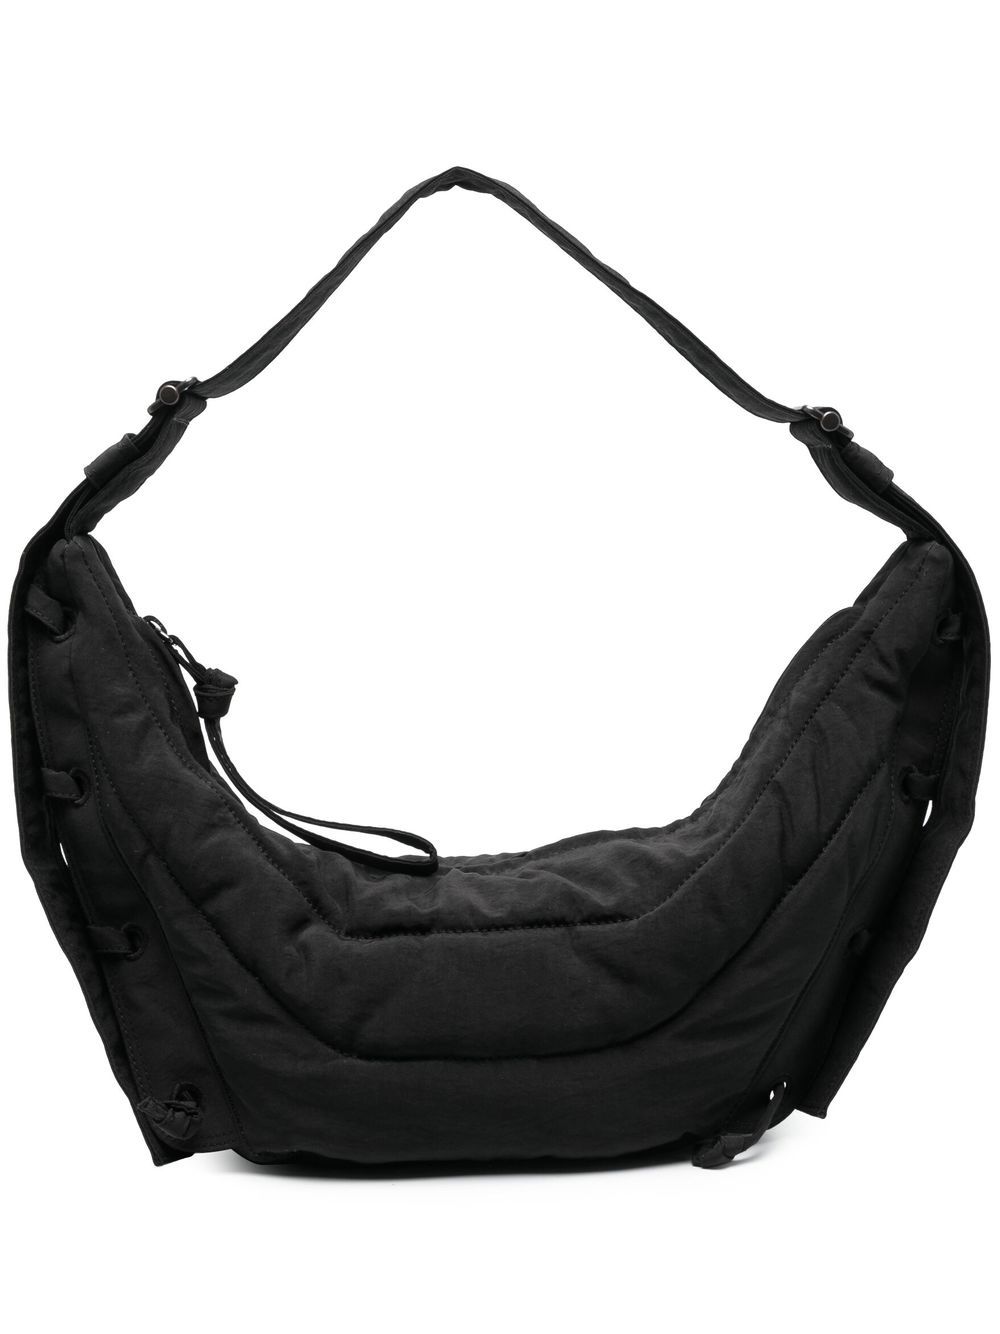 LEMAIRE small Soft Game shoulder bag - Black von LEMAIRE